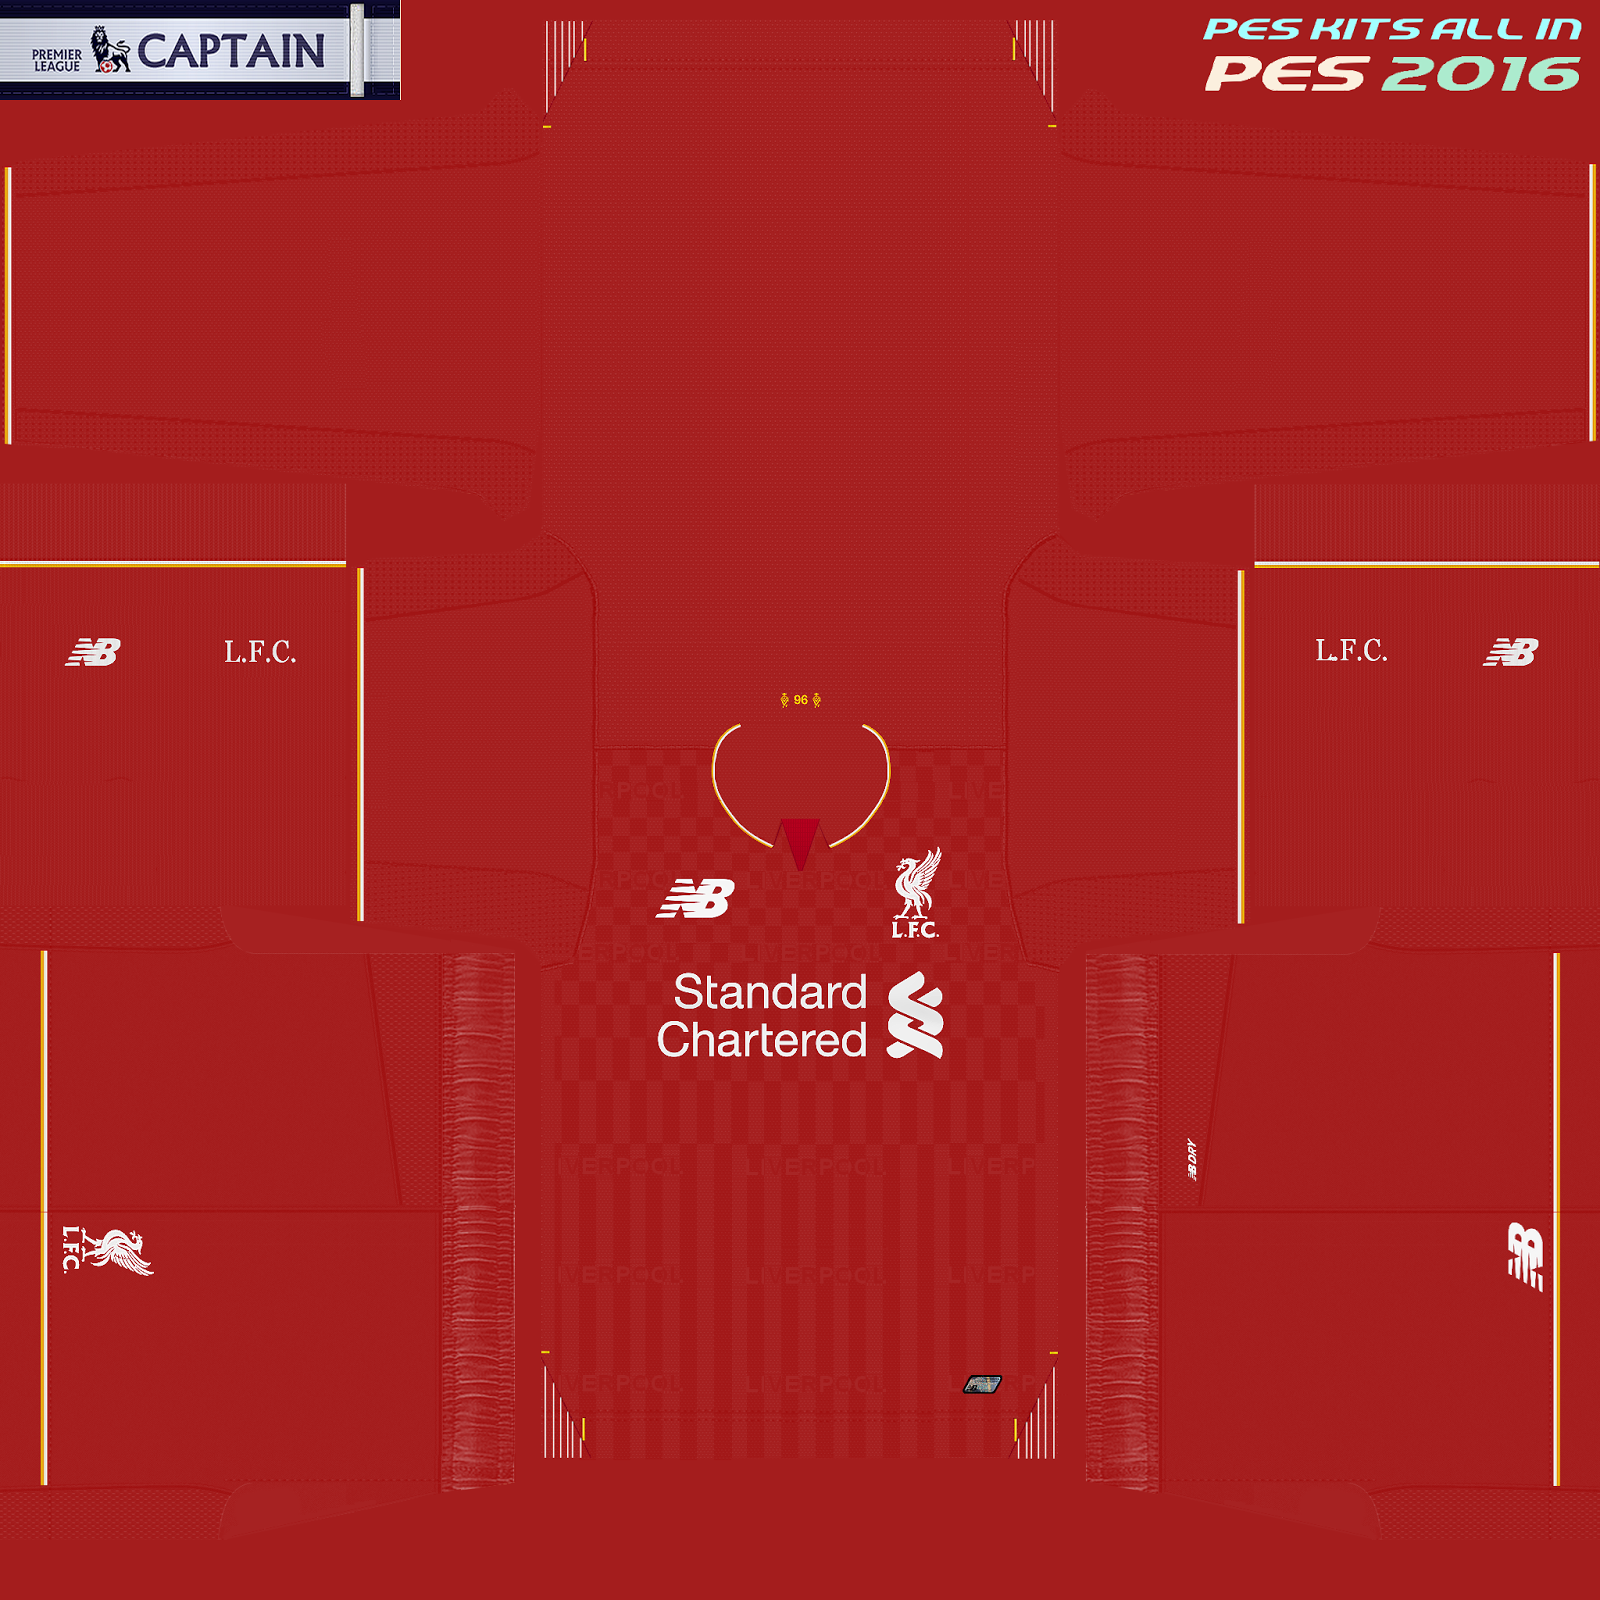 PESEDIT2016: LIVERPOOL FC PES 2016 PS41600 x 1600